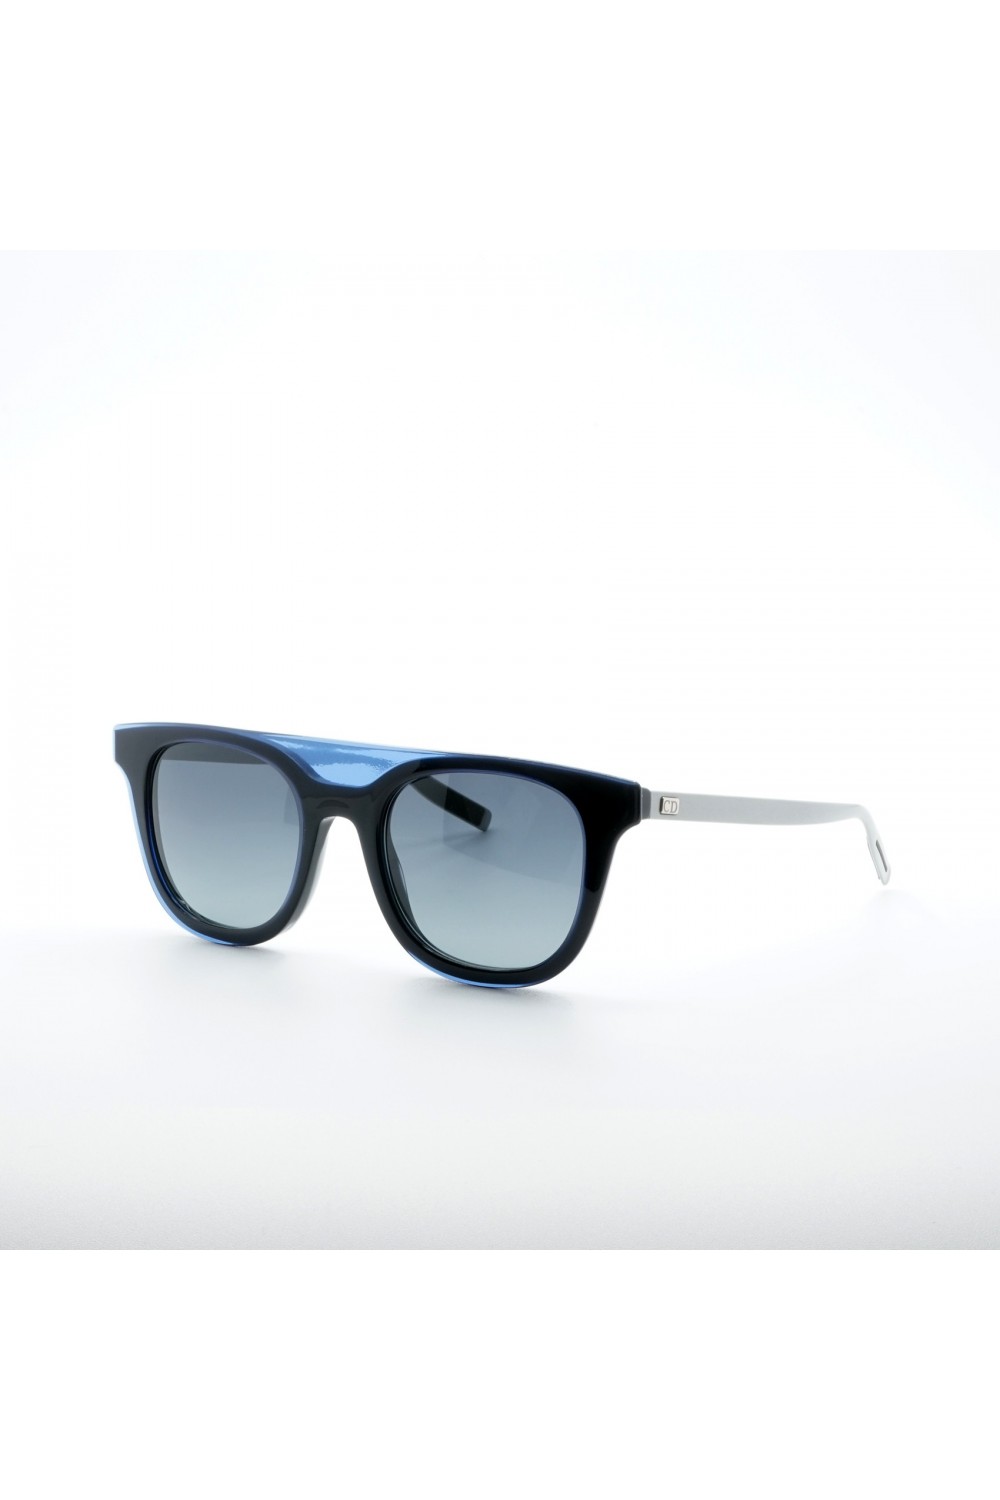 Christian Dior - Occhiali da sole in celluloide squadrati per uomo blu -